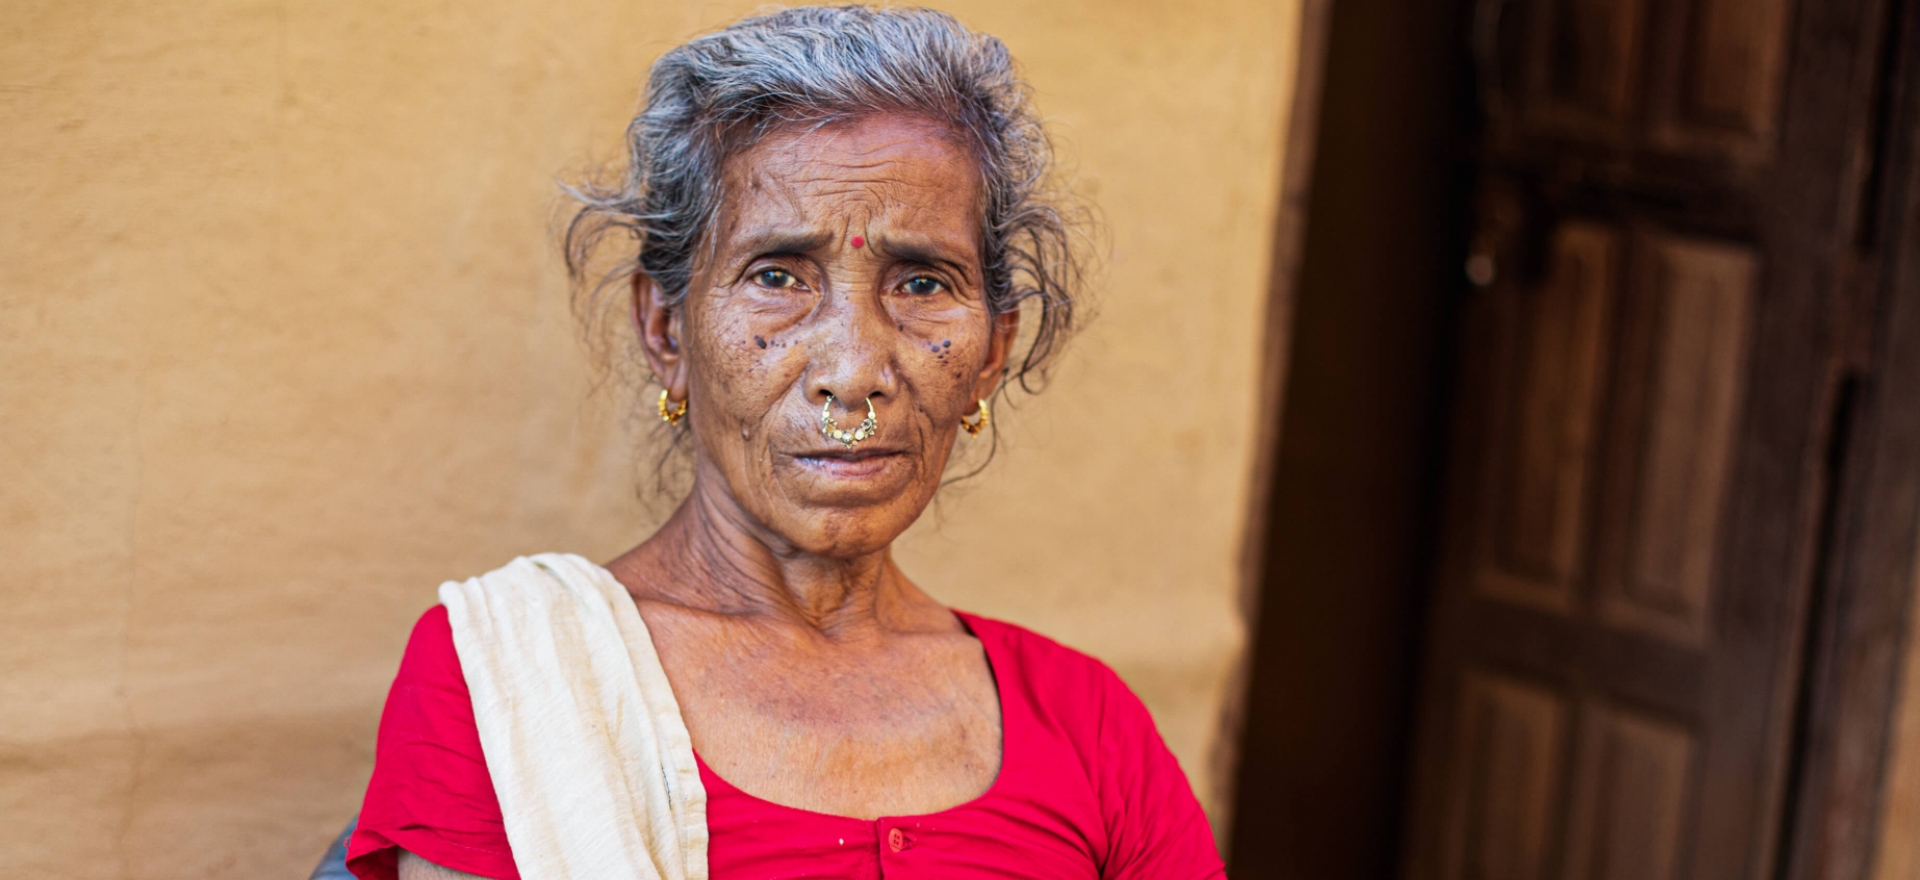 Kmen Tharu, Nepál - Martina Grmolenská | Planeta lidí